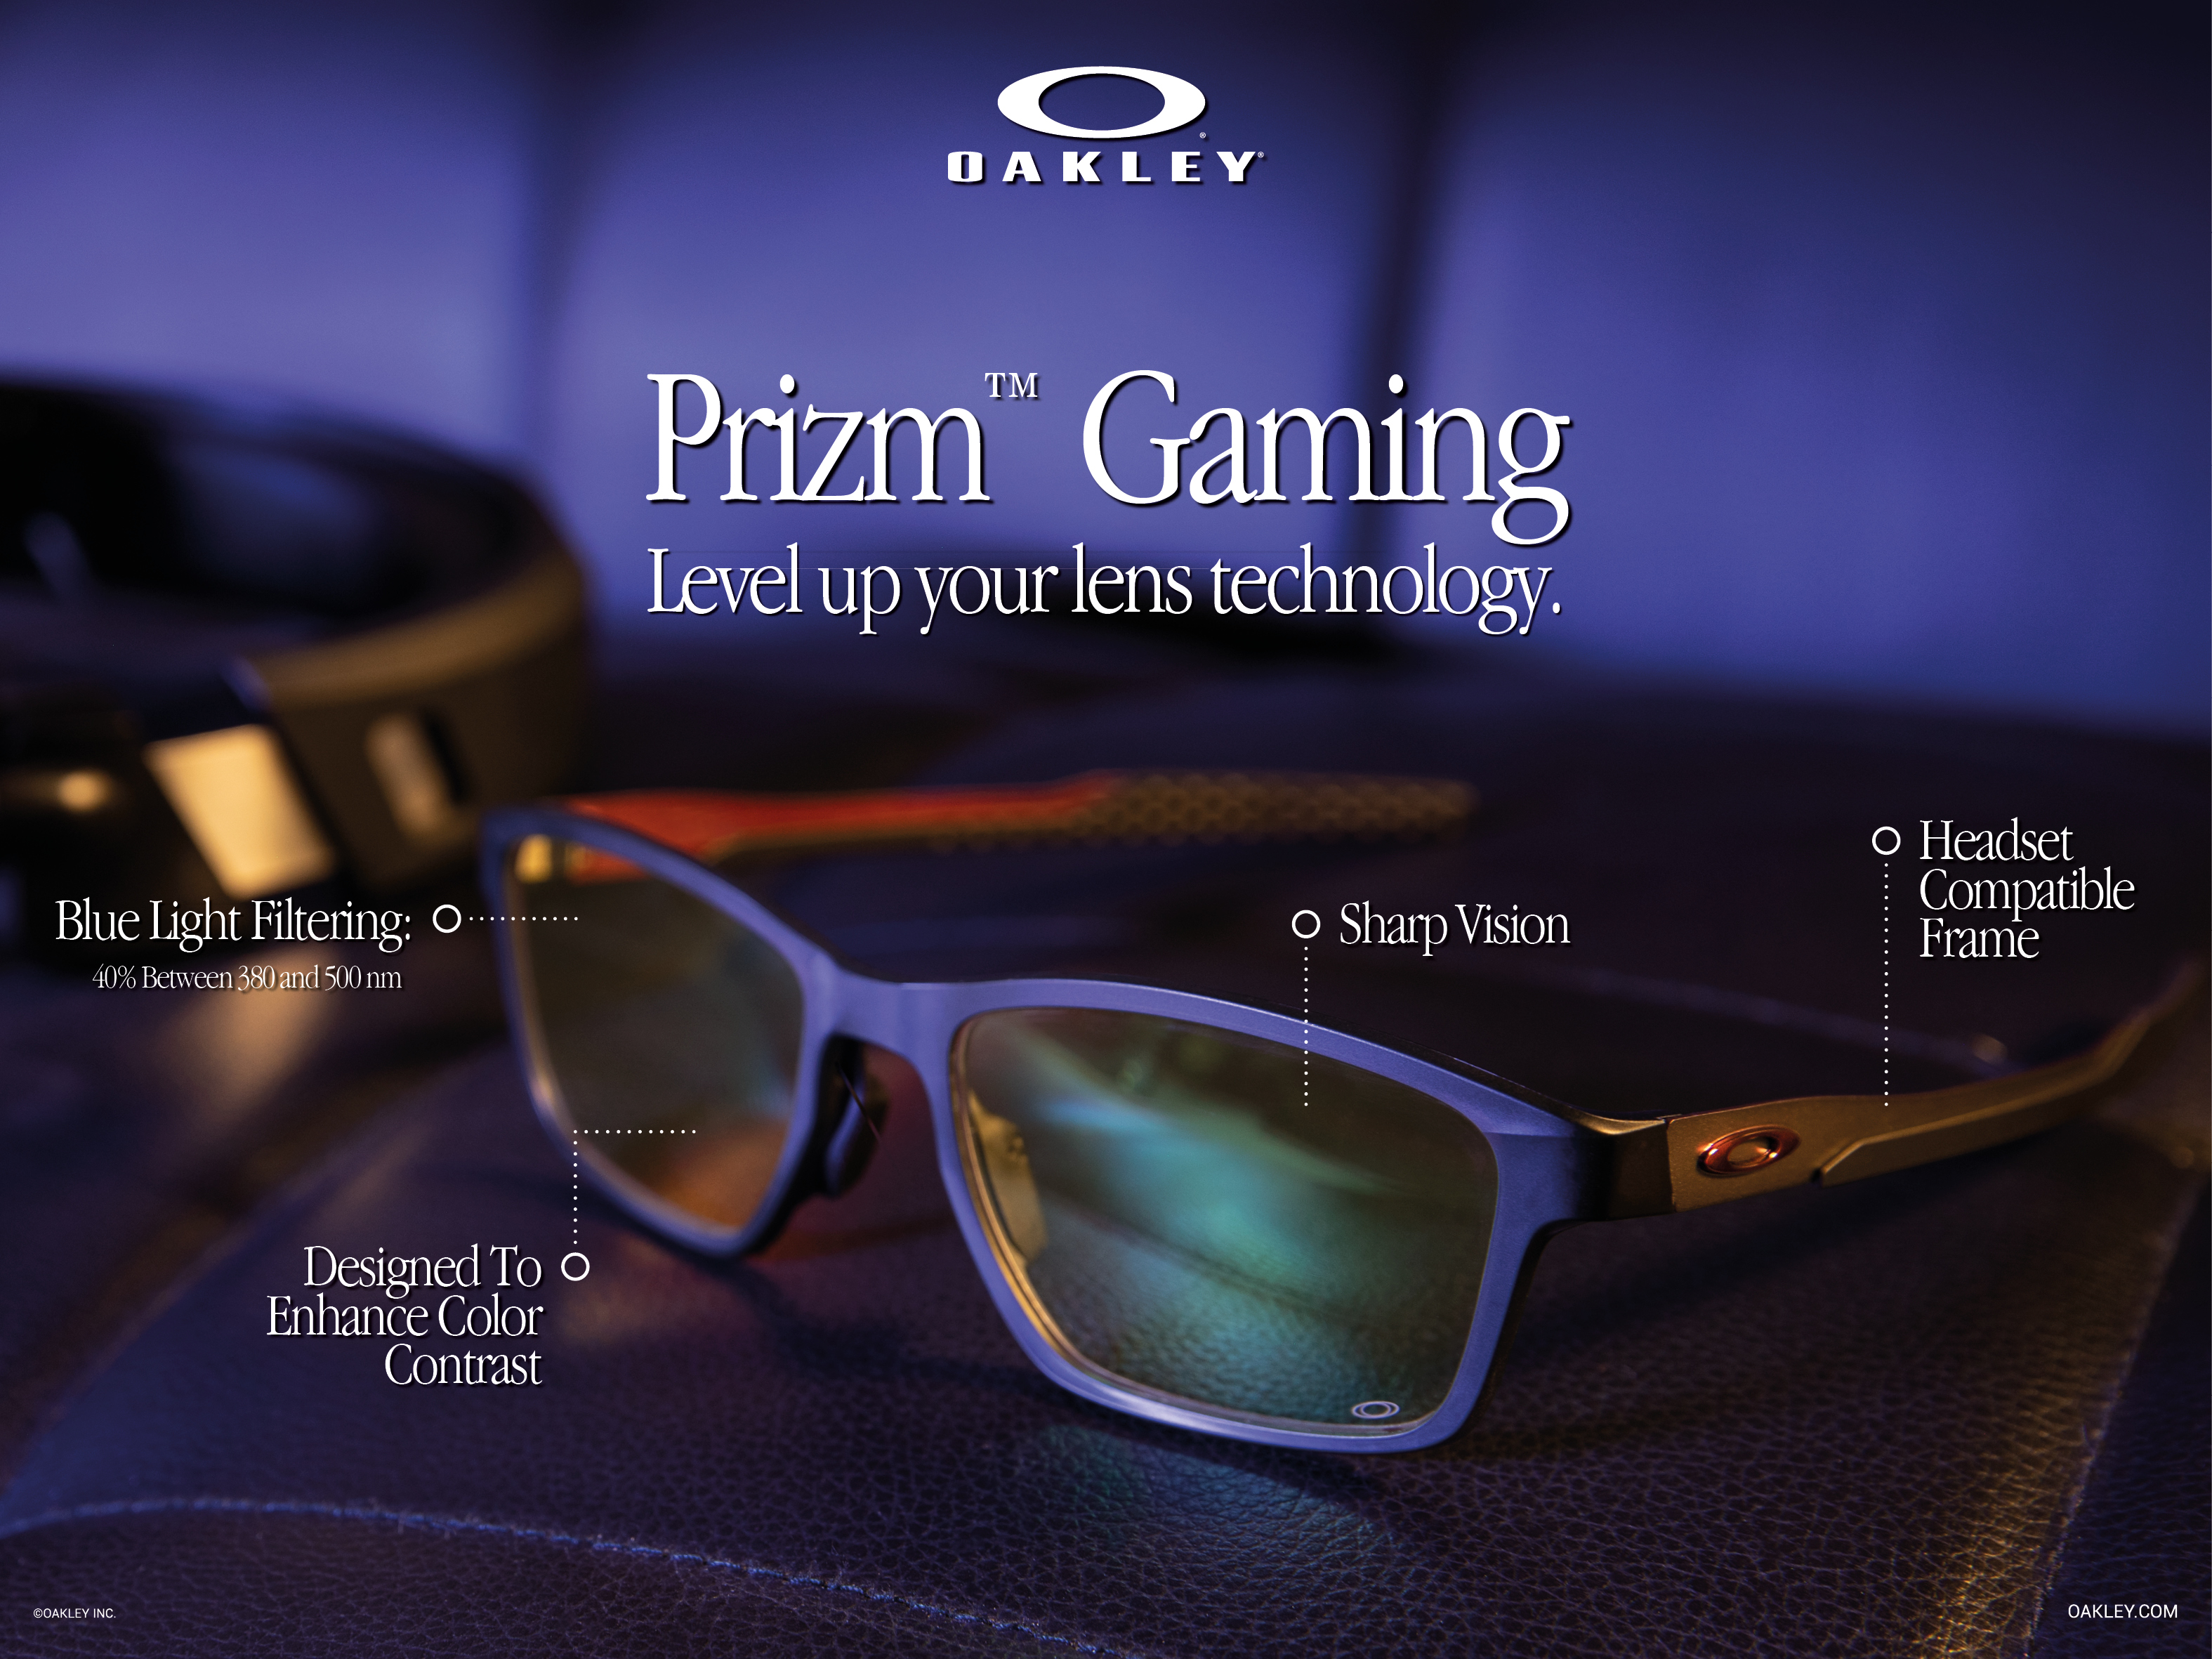 Oakley PRIZM Gaming Lens Review | SportRx